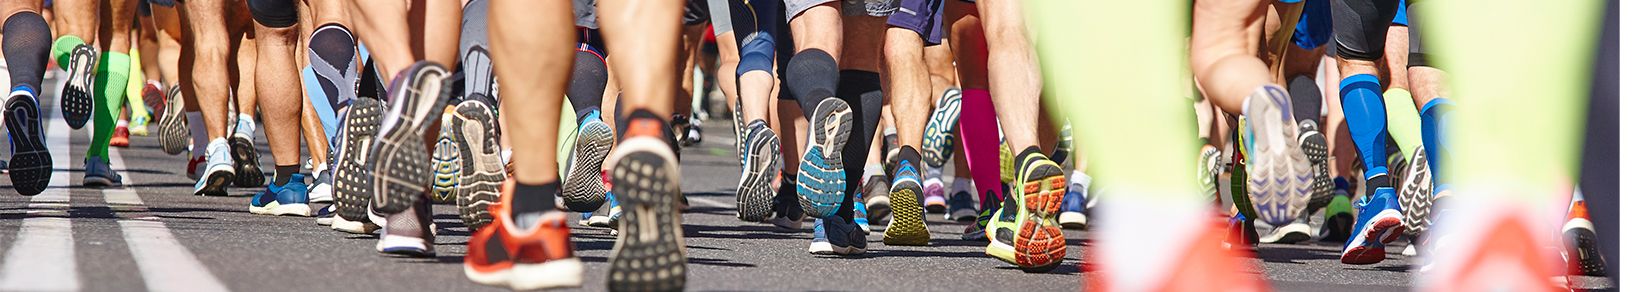 feet of marathon particpants during race